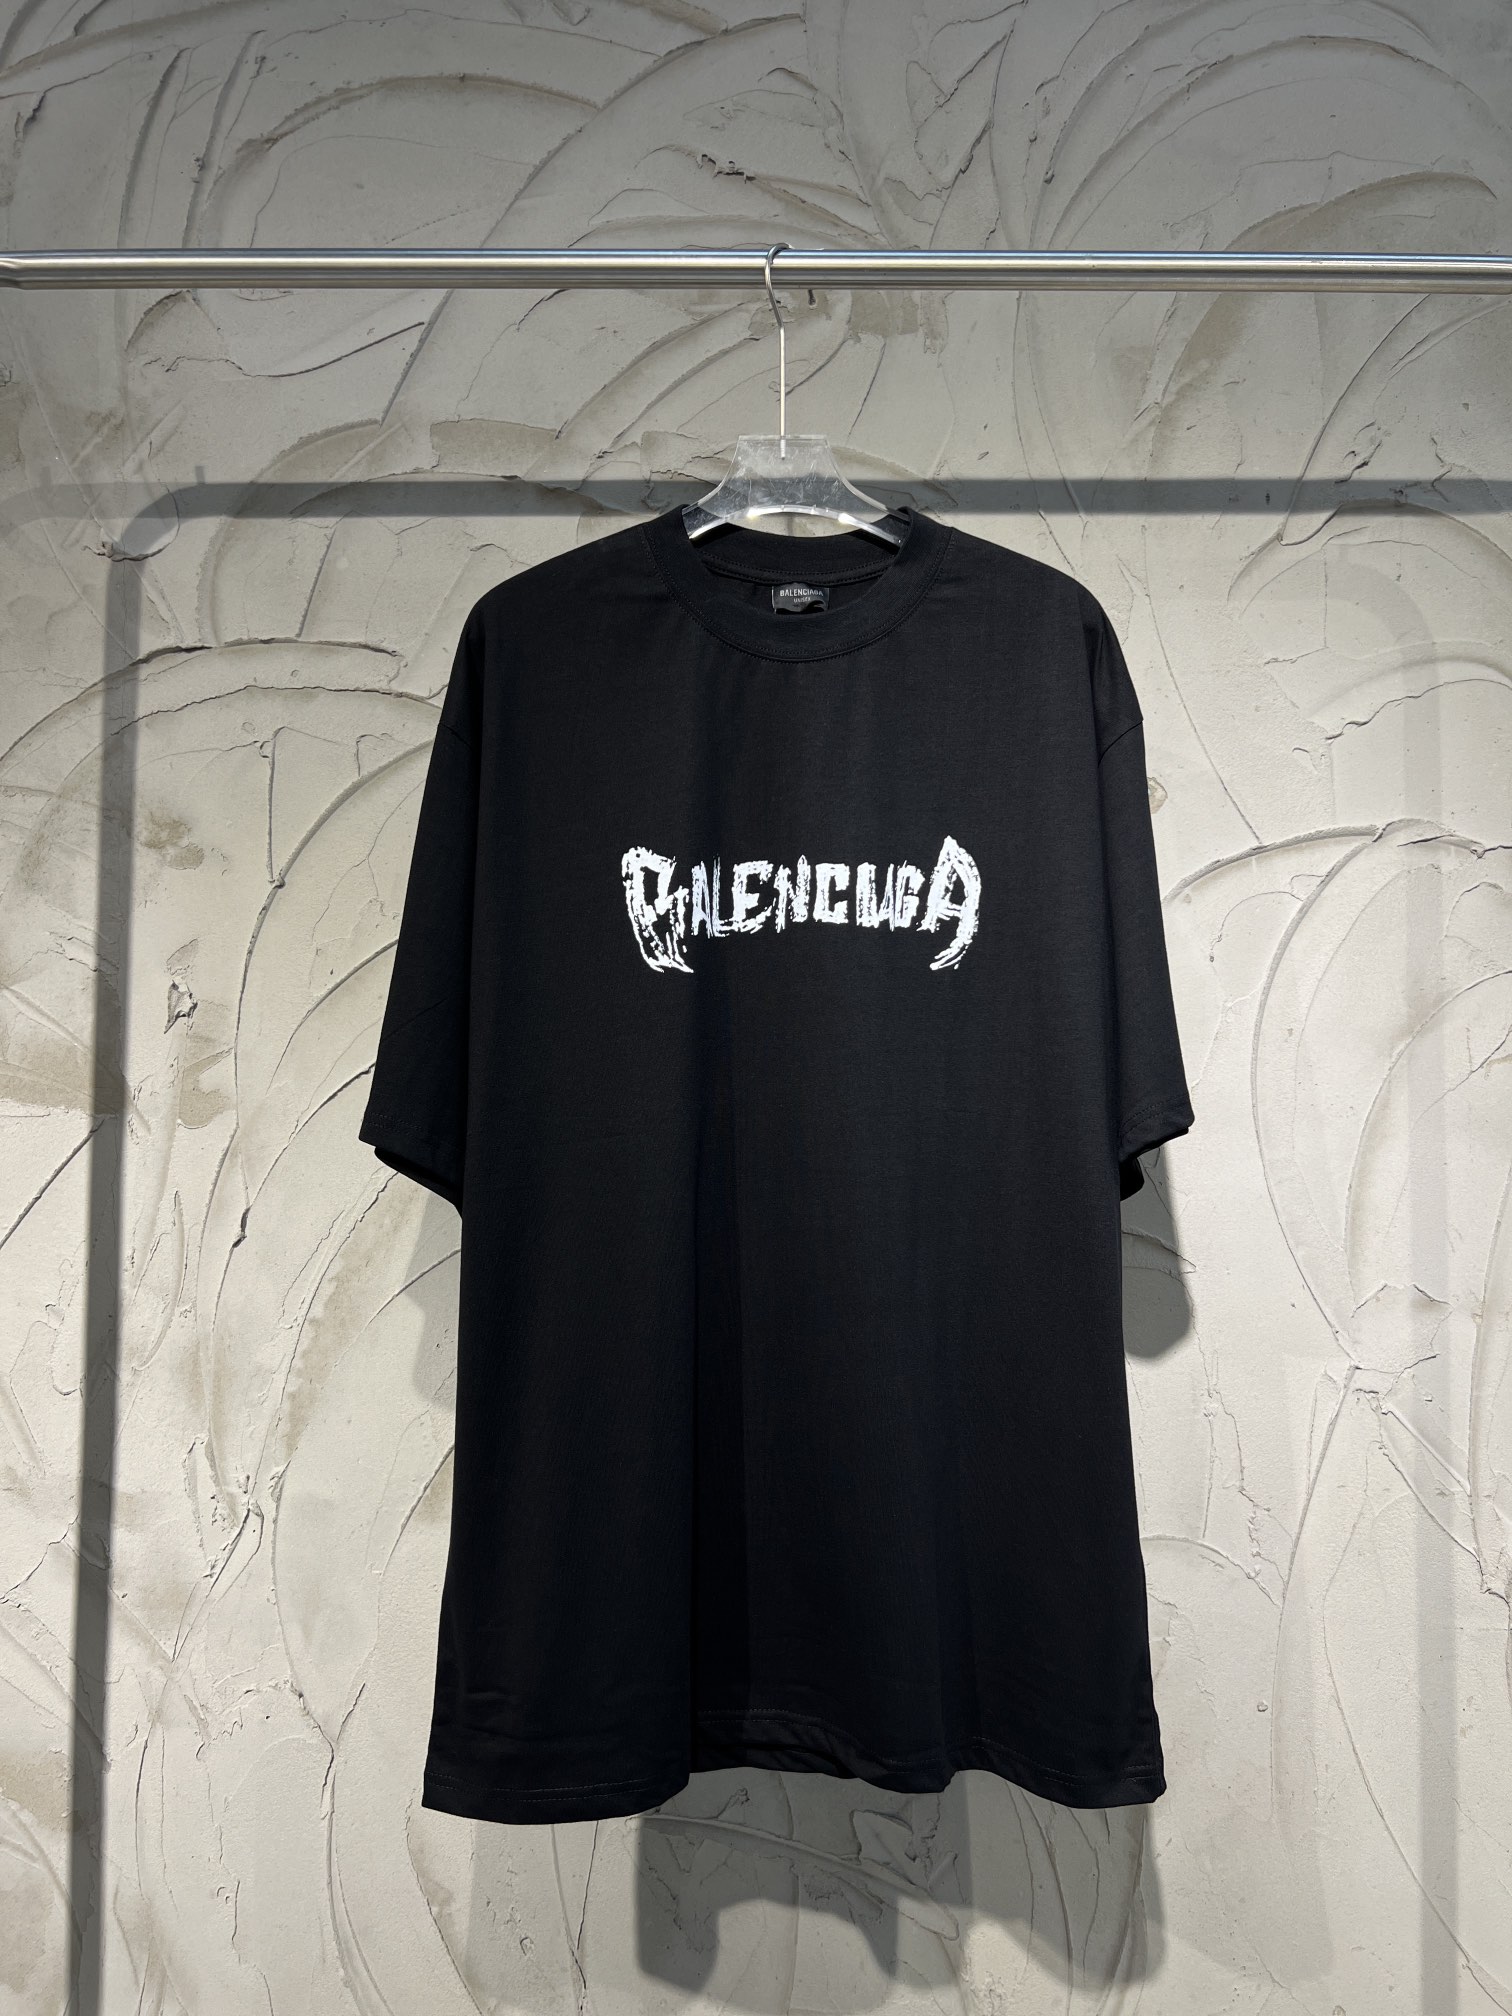 Balenciaga Clothing T-Shirt Printing Unisex Cotton